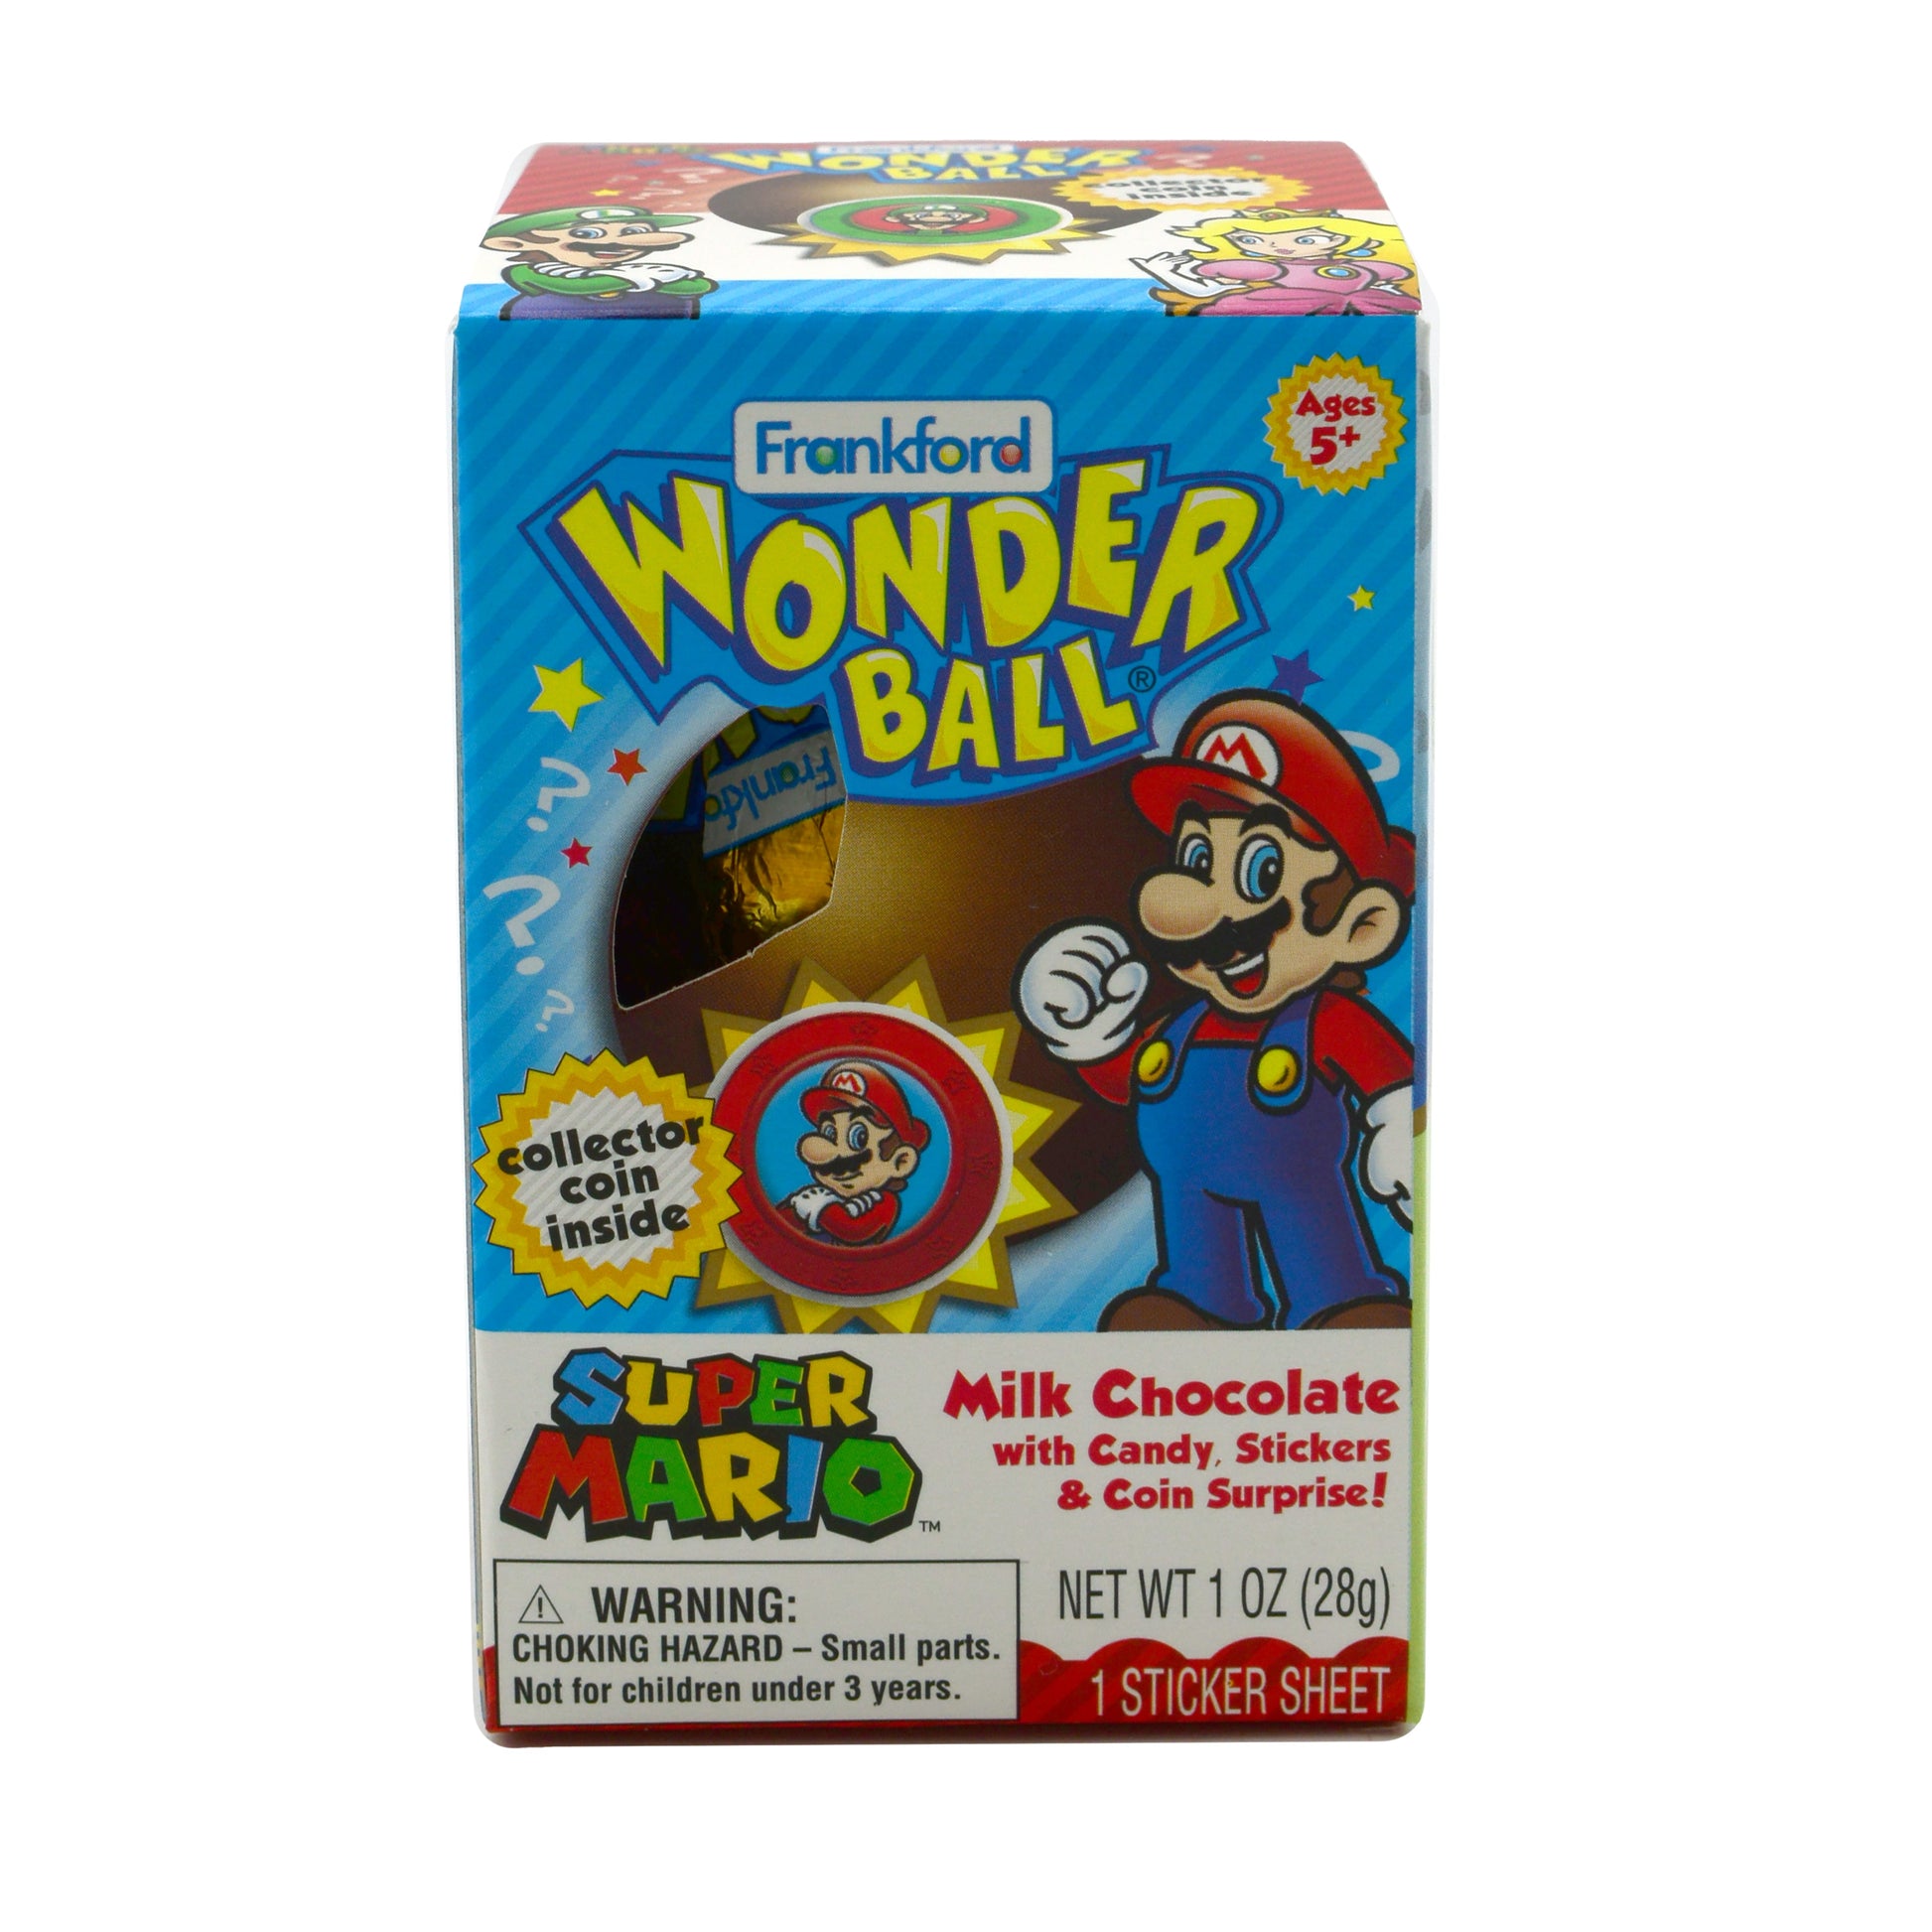 Blue wonderball box with Mario 